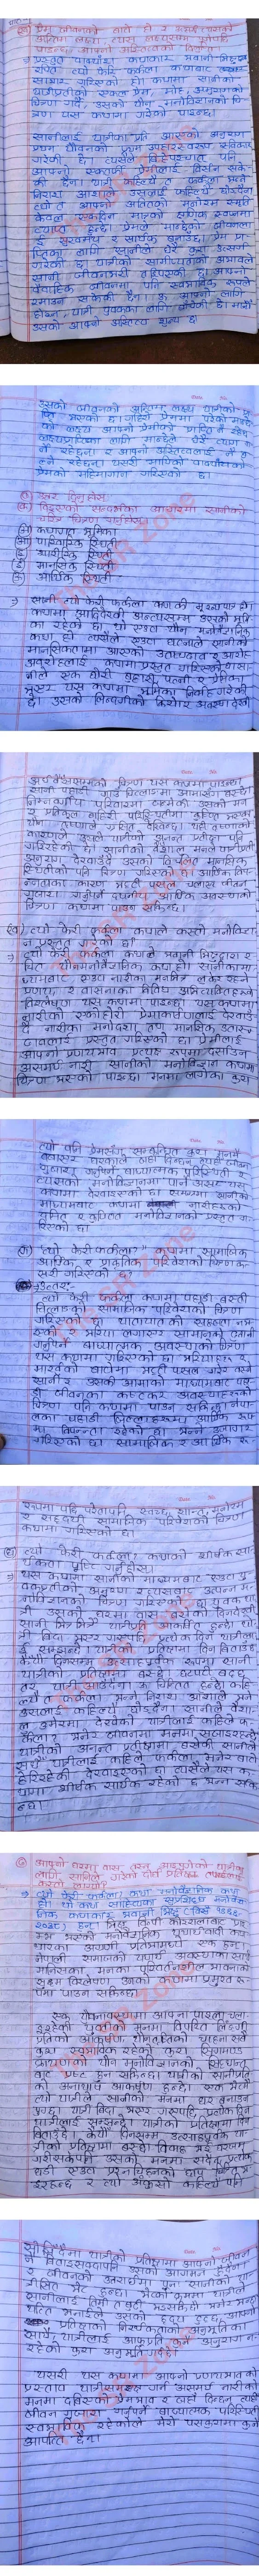 Tyo feri farkala class 11 exercise : Summary and Notes of Nepali Unit 6